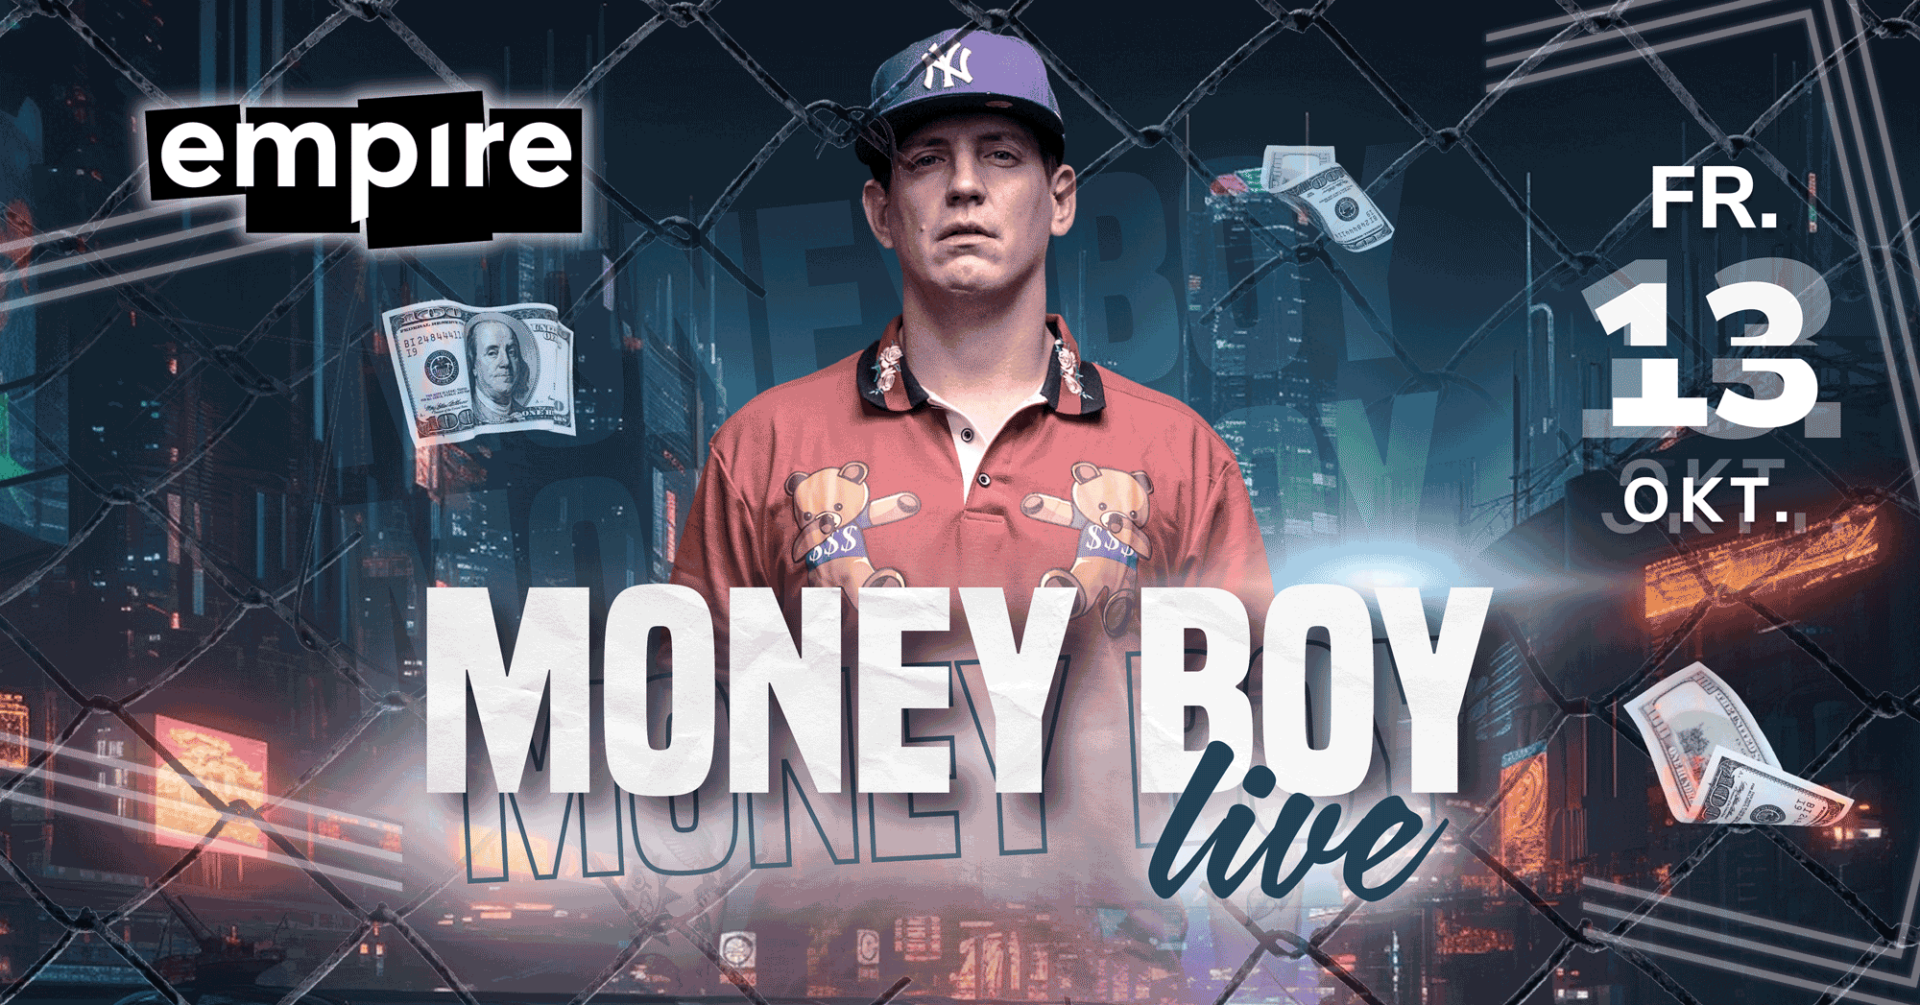 Moneyboy live im empire | FR 13.10.